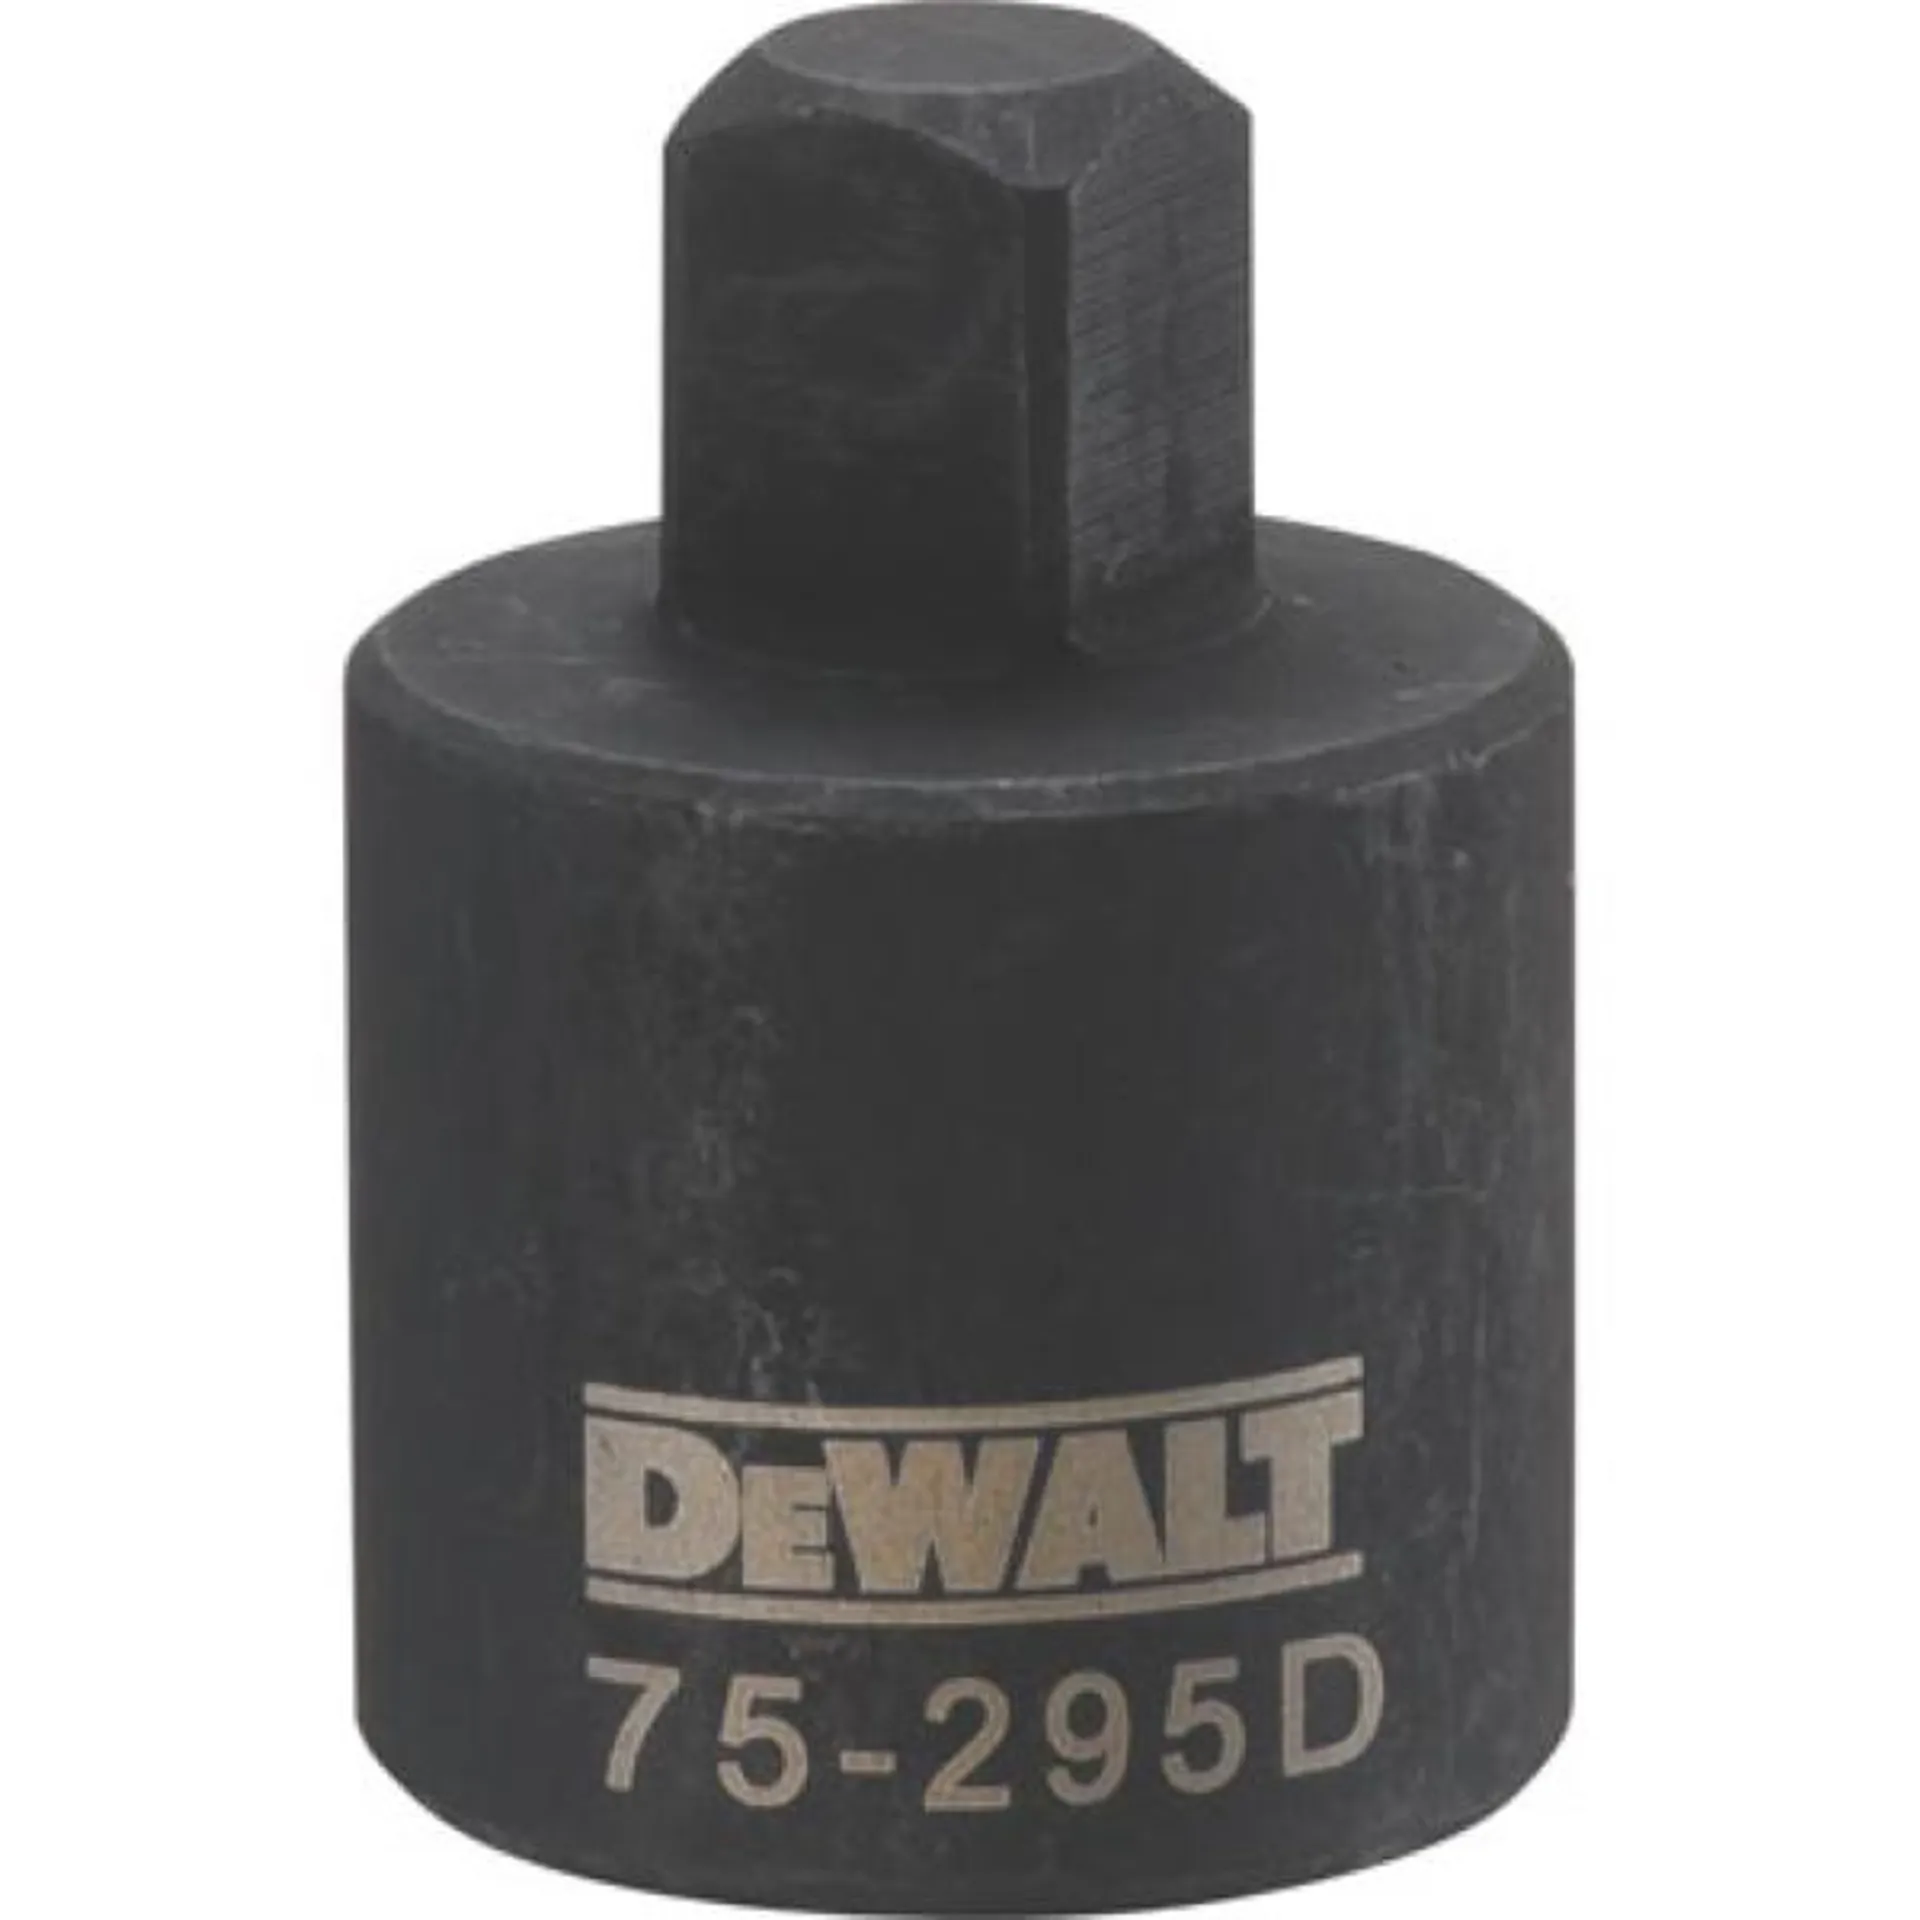 3/4" X 1/2" Impact Reducing Adapter - DWMT75295OSP